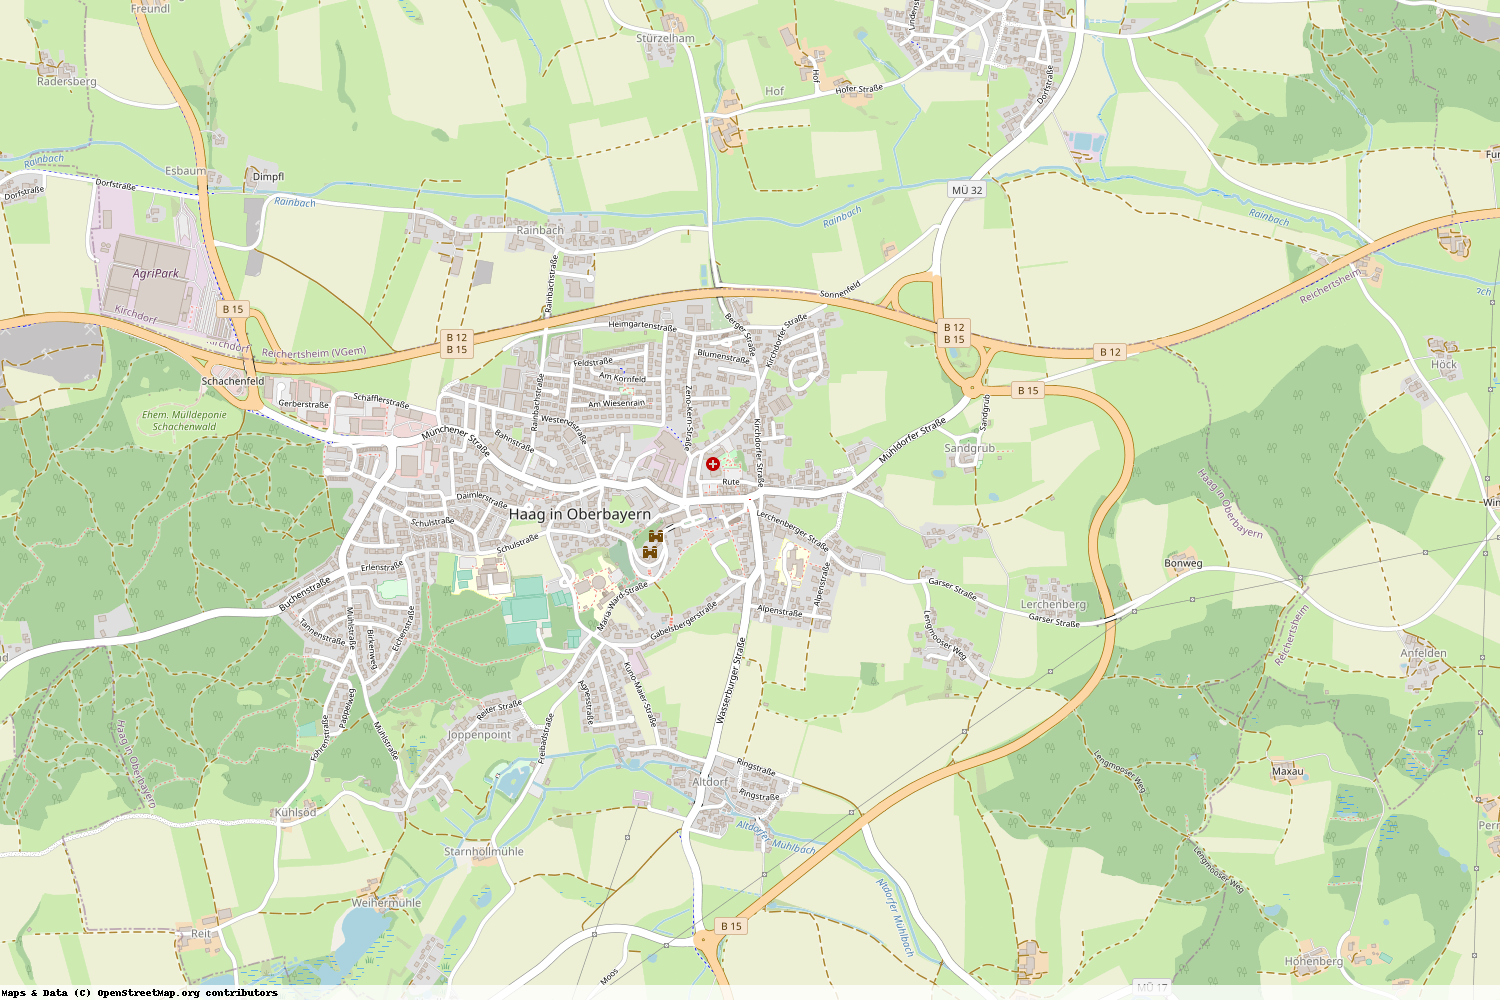 Ist gerade Stromausfall in Bayern - Mühldorf a. Inn - Haag i. OB?